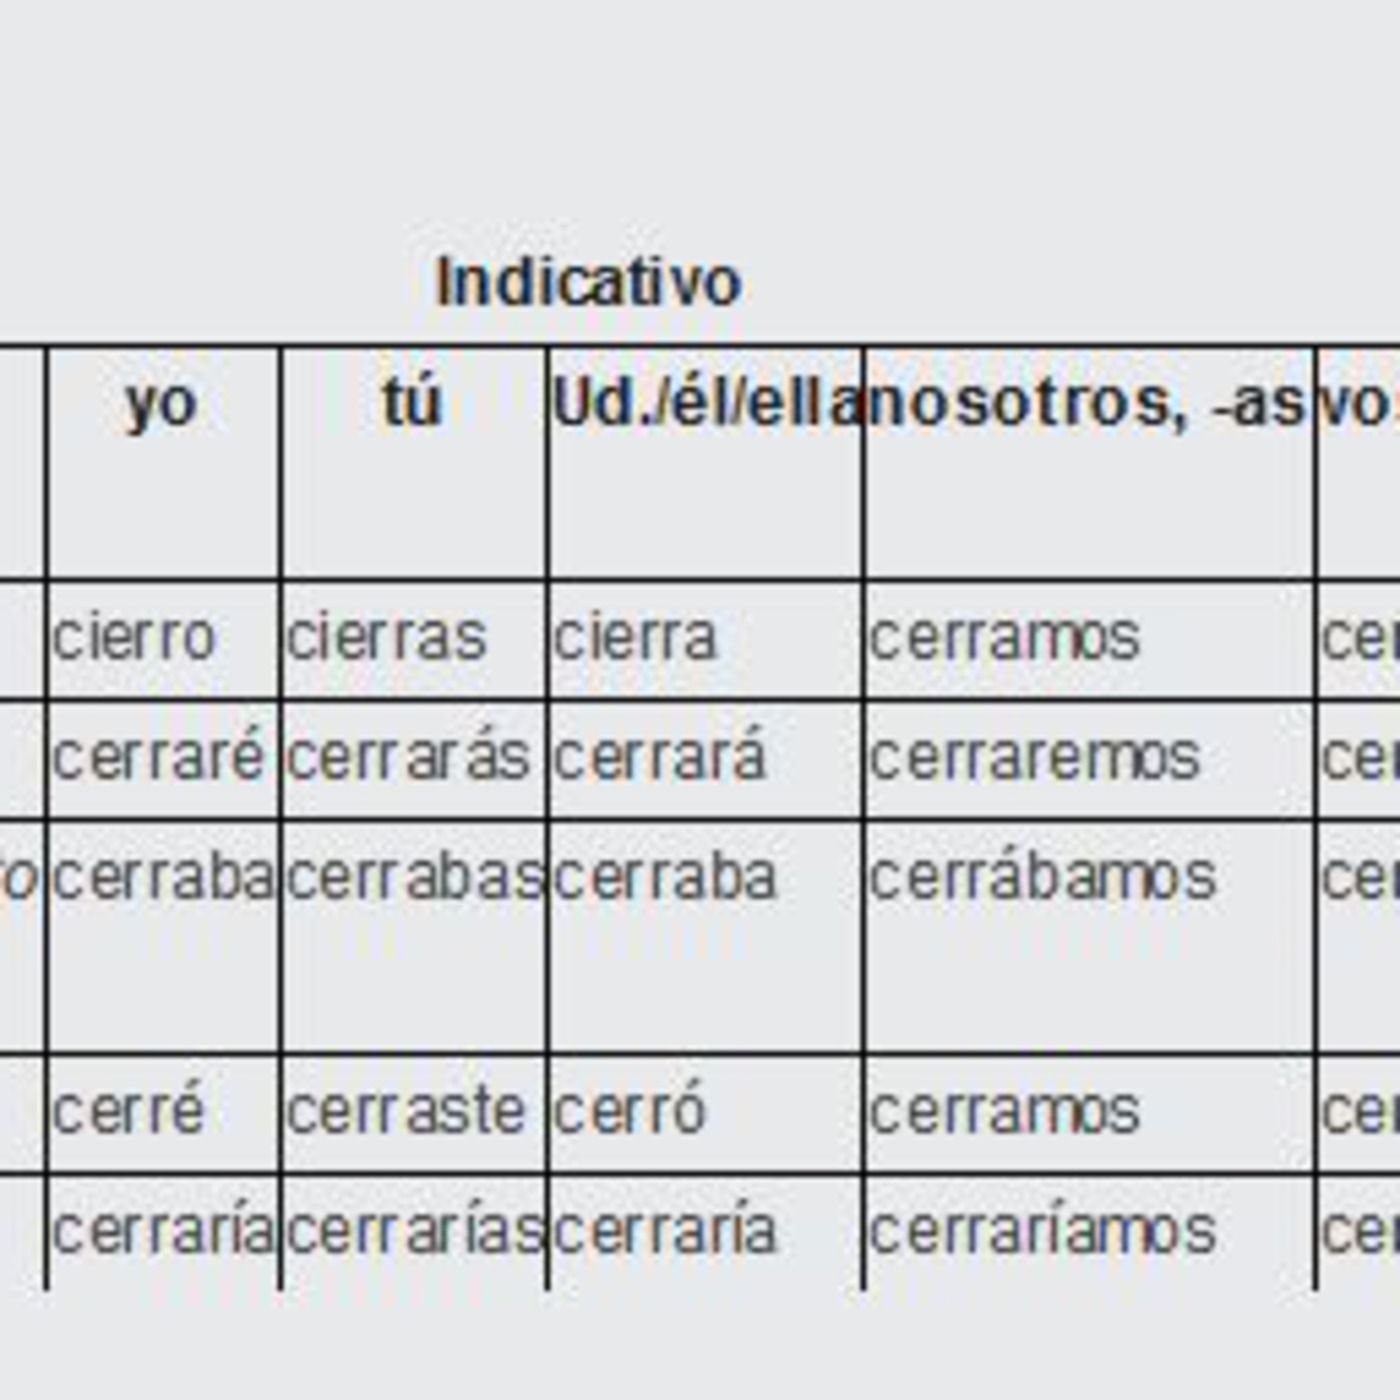 Spanish Regular Verbs Conjugation Chart